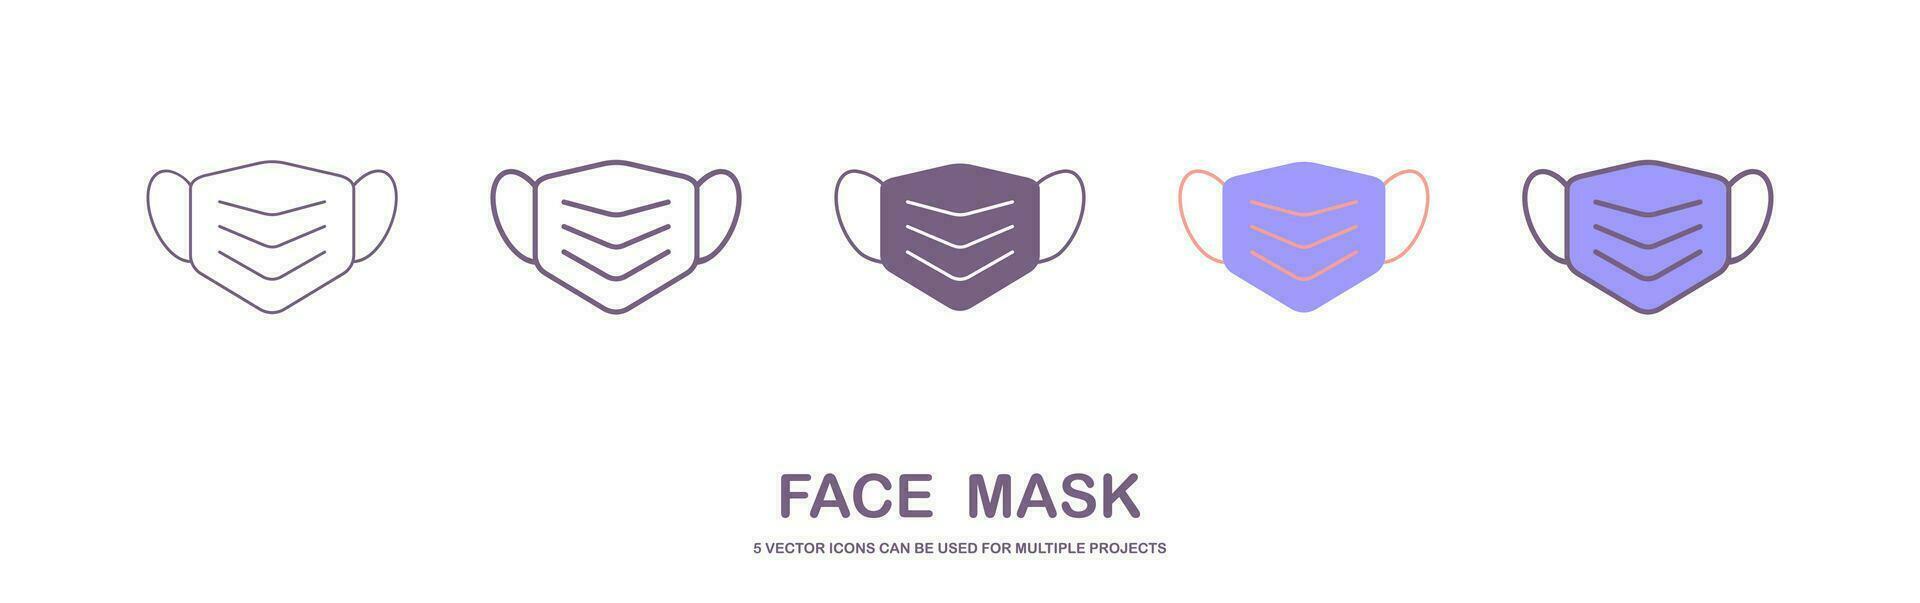 saneamento e proteção máscara facial ícone conjunto com respiratório face máscaras. face mascarar com 5 diferente estilos. esboço estilo vetor